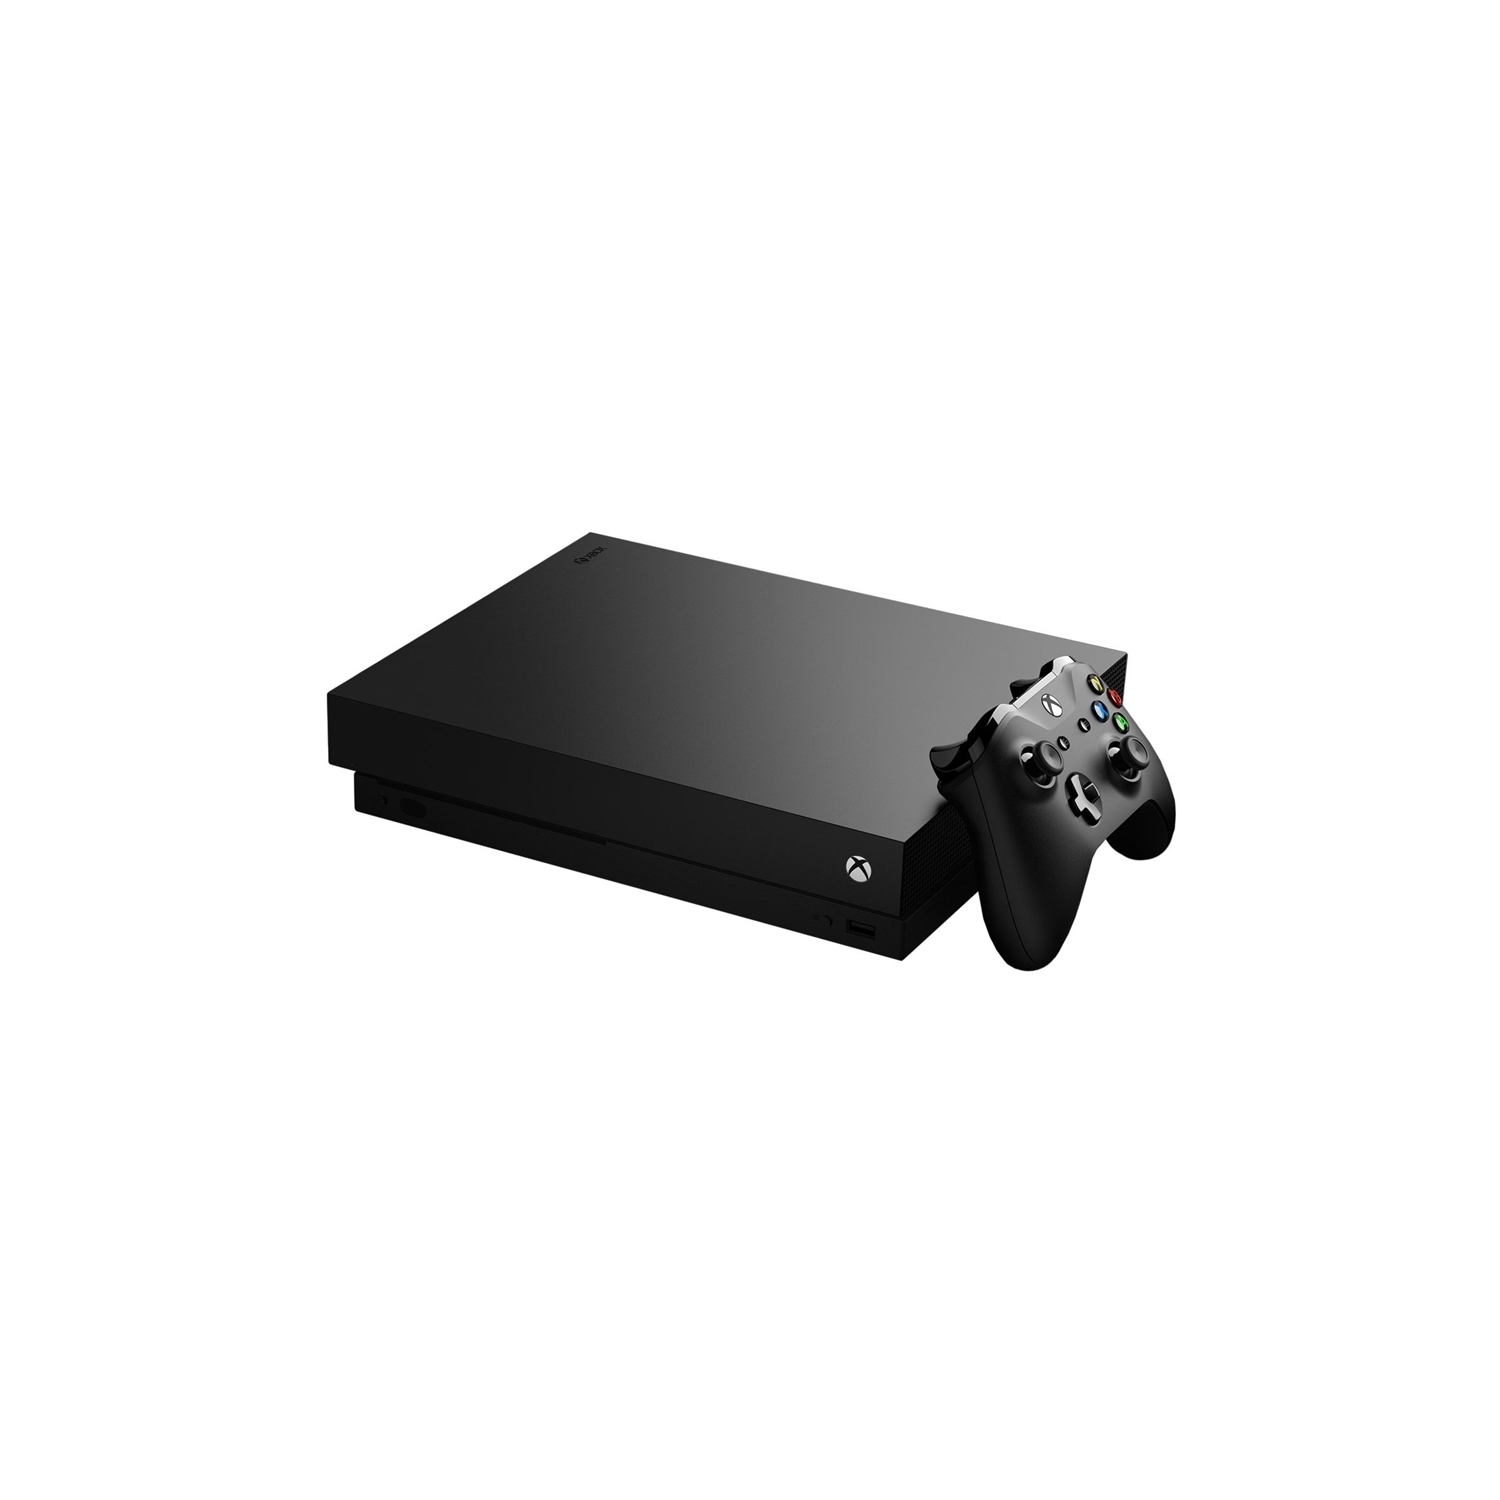 Microsoft Xbox One X 1TB Console Black (Refurbished)